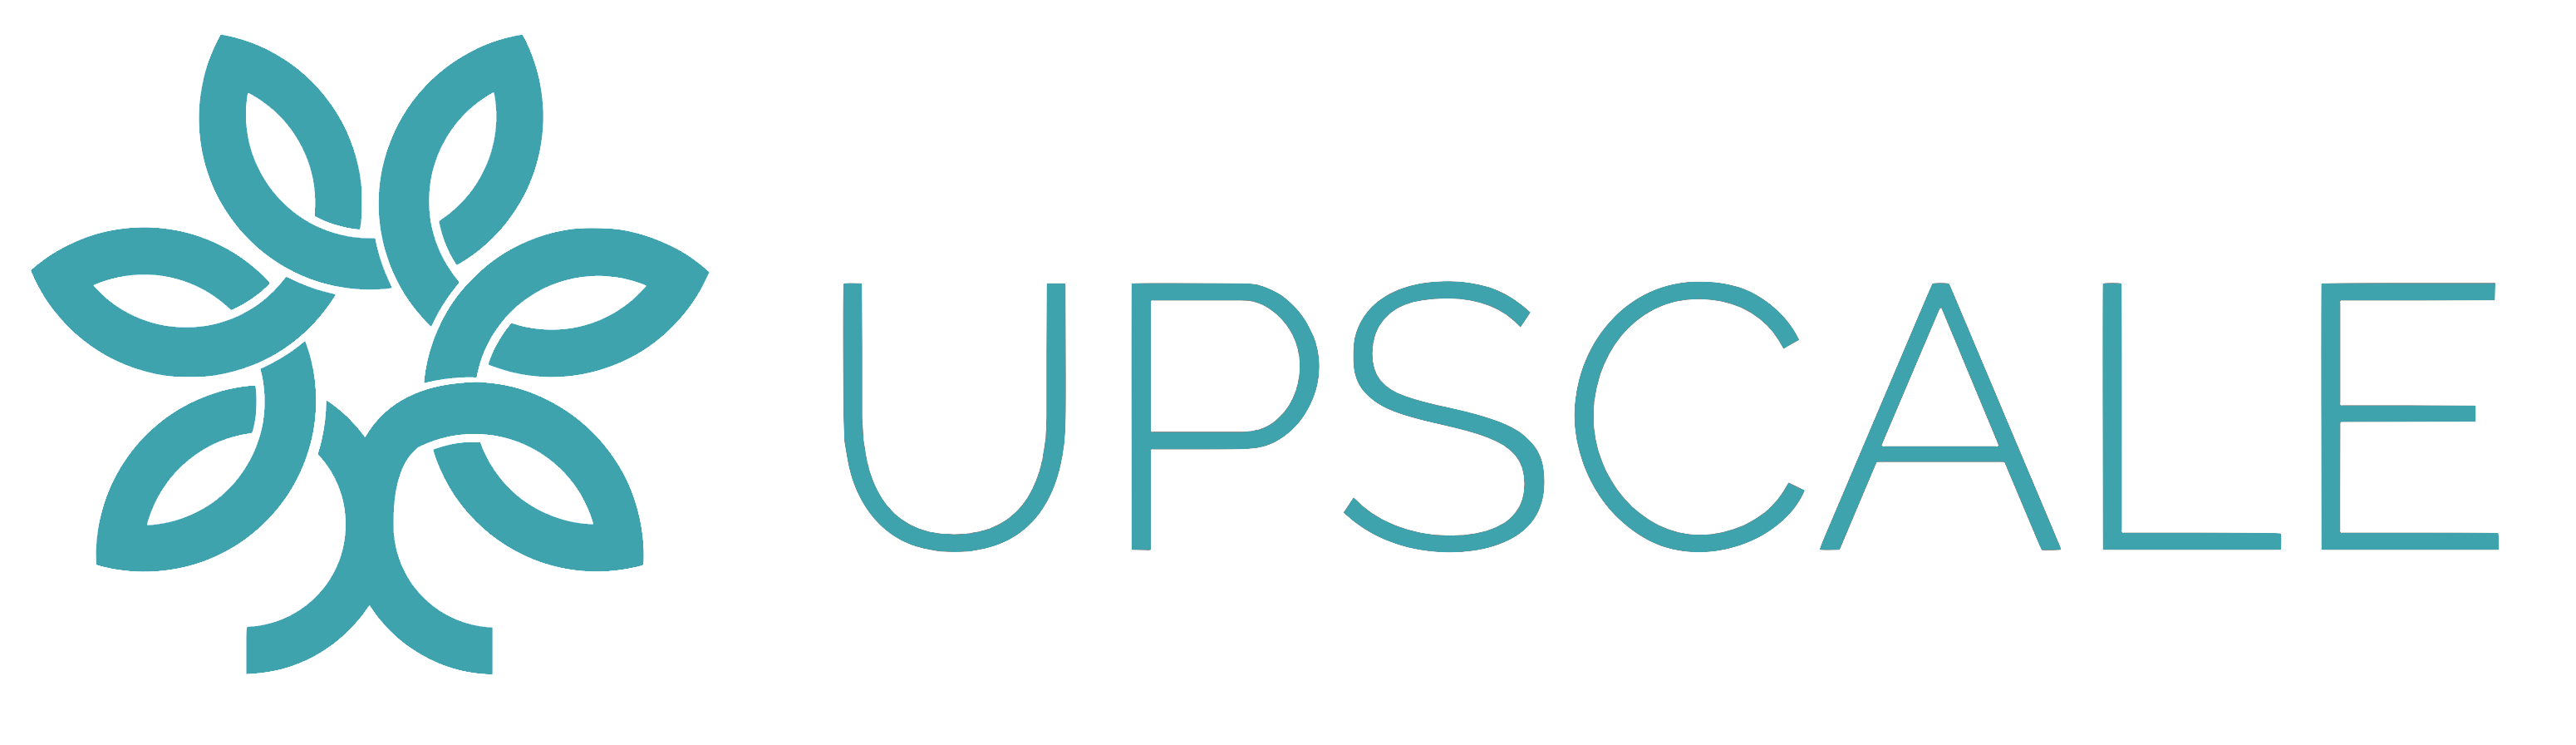 Top Upscale Logo